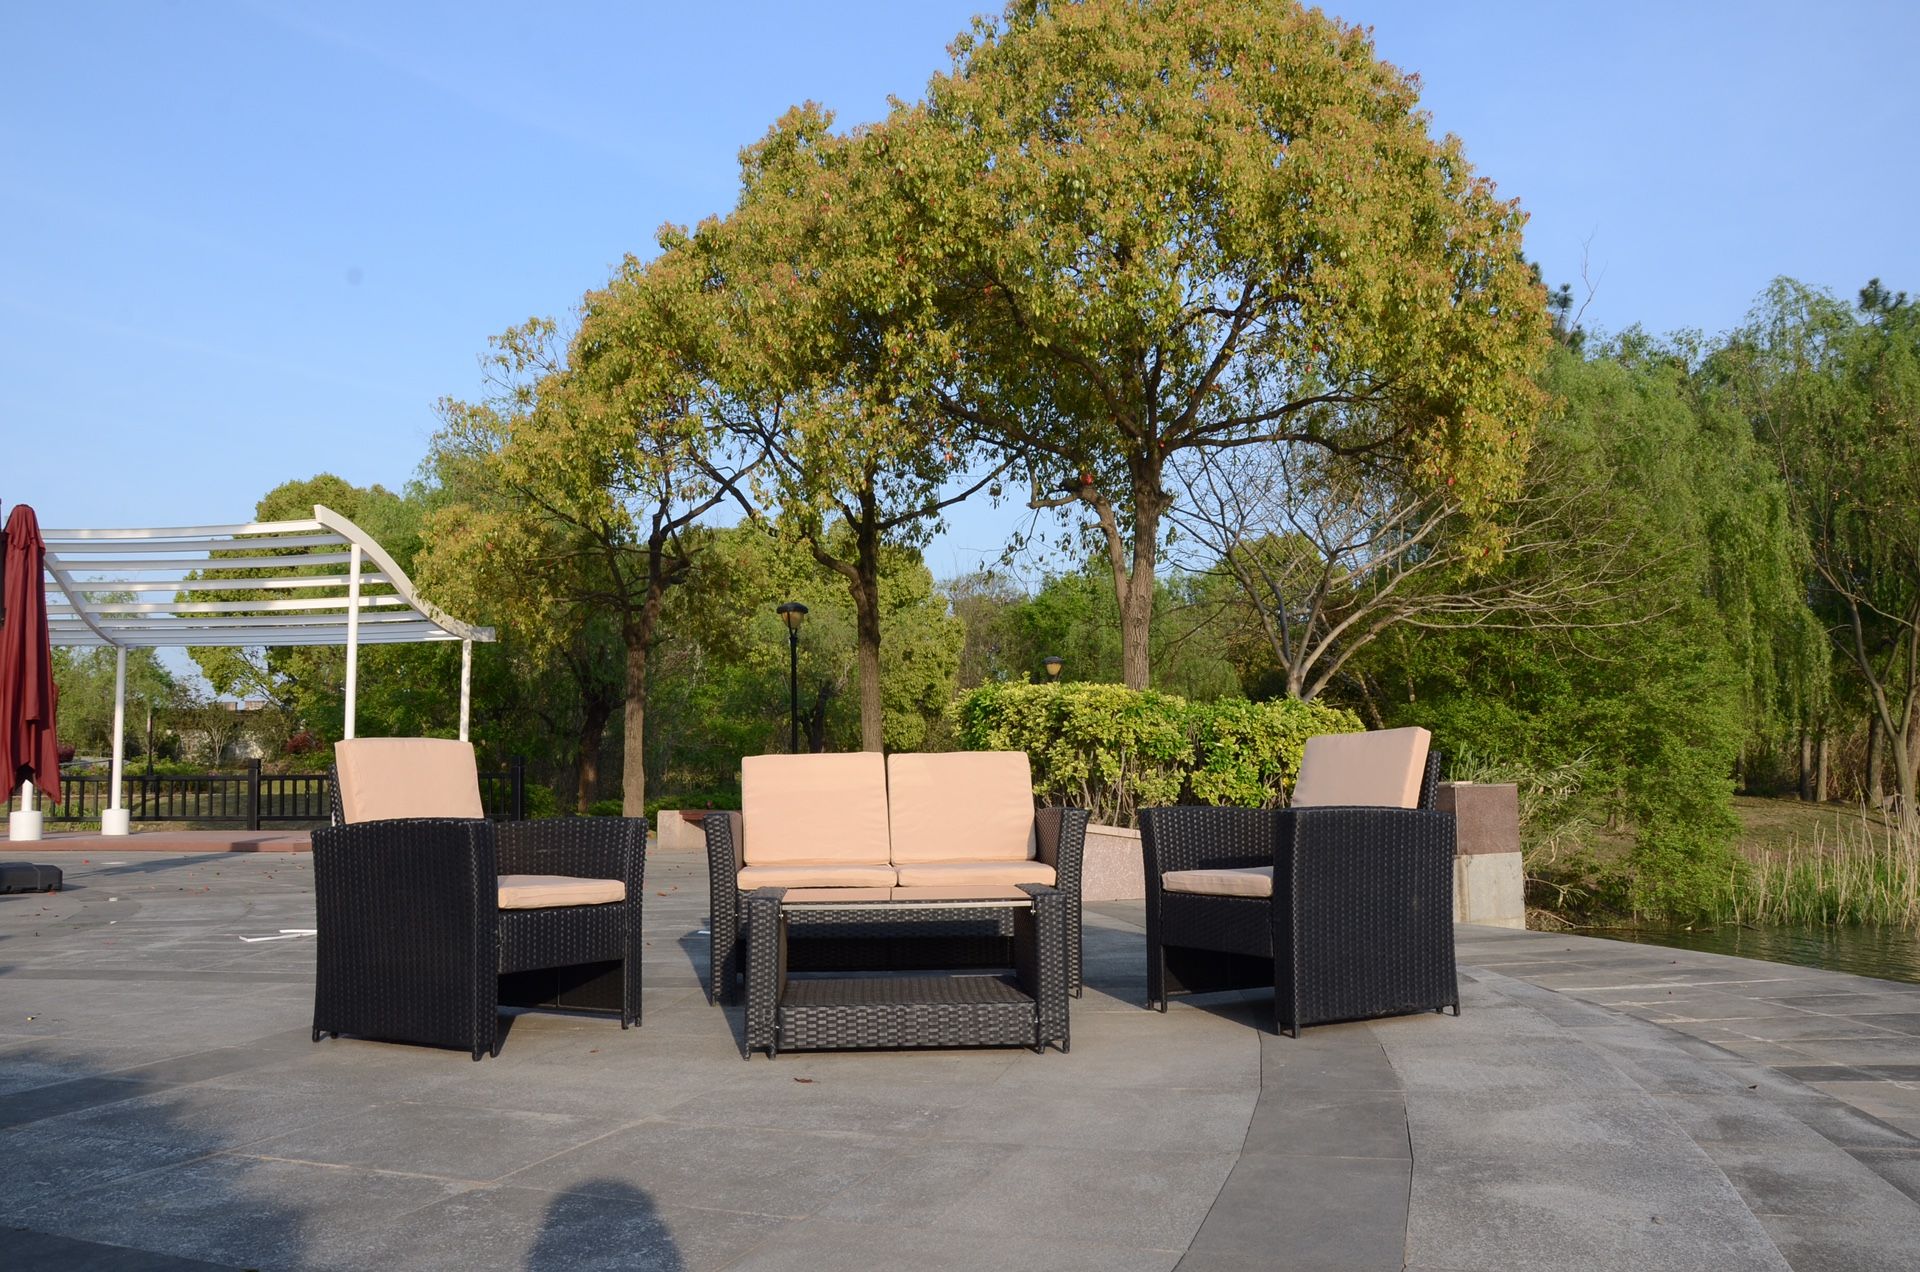 Bamboo Outdoor Garden Furnitures Set Buy One Set Get FREE Full Metal Table.